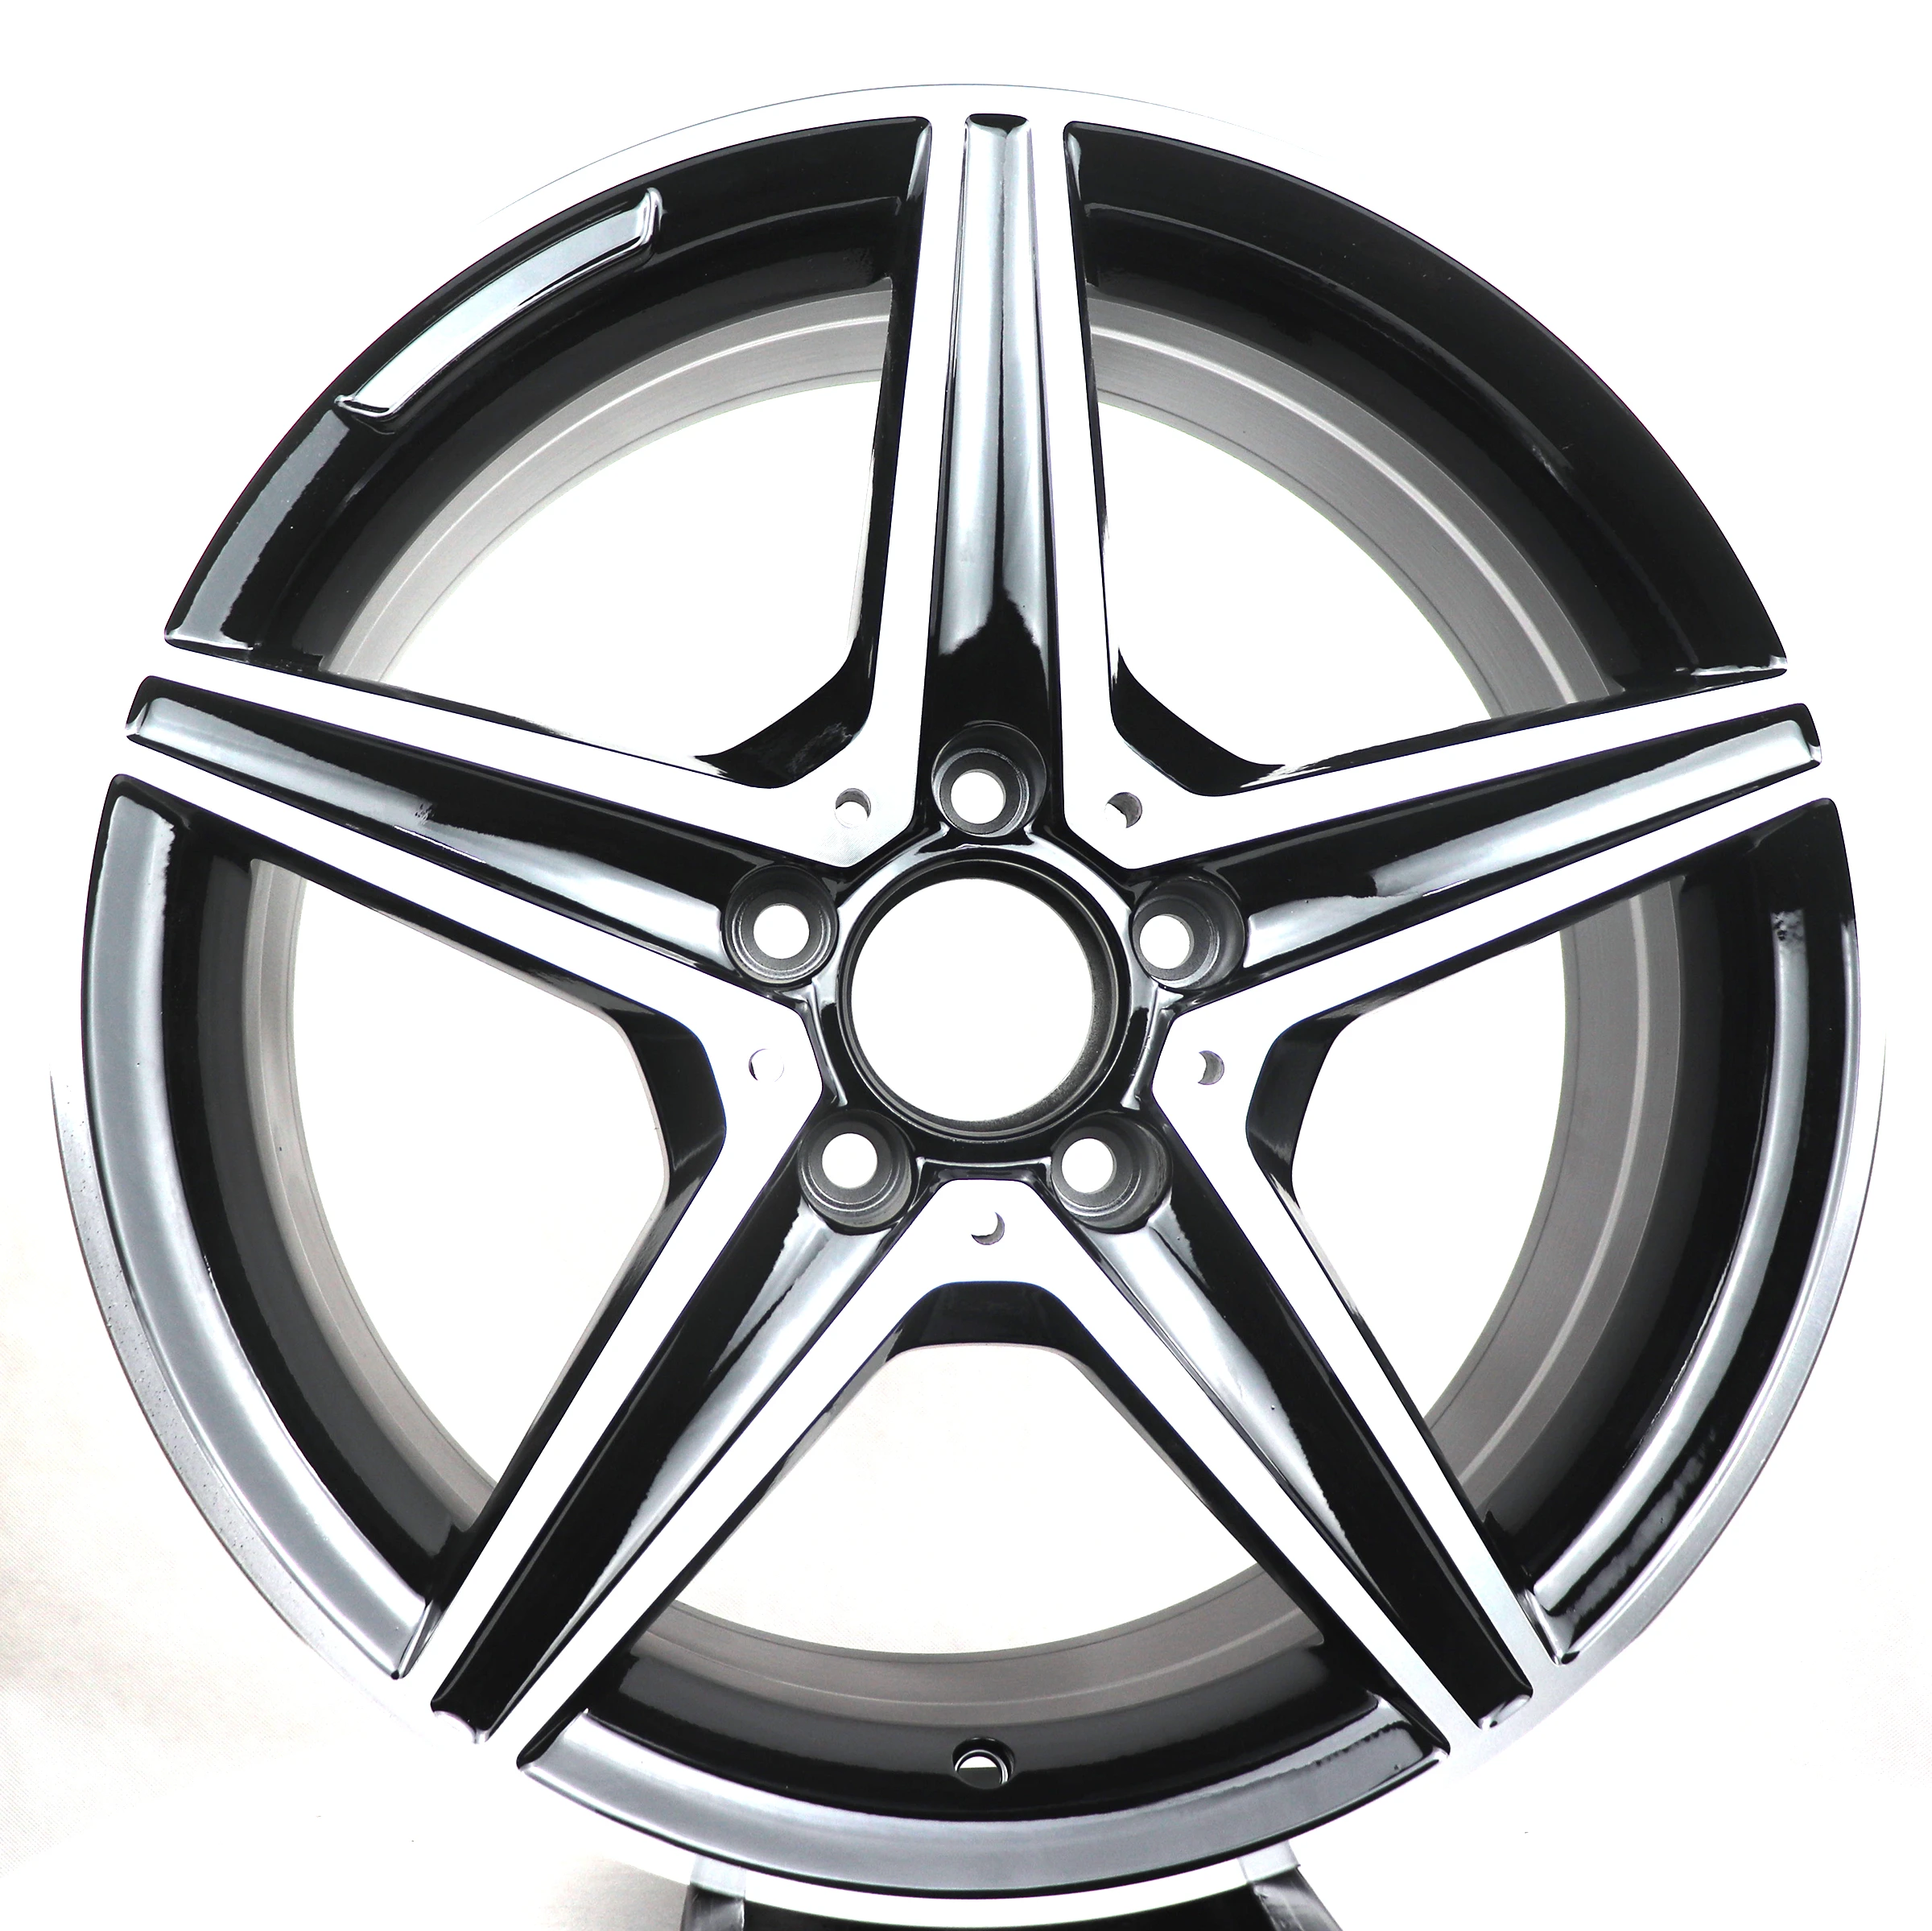 

Hot Sale Customized Original Replica Wheels 17-24 inch 5x112 Car Alloy Wheel Rims For Benz